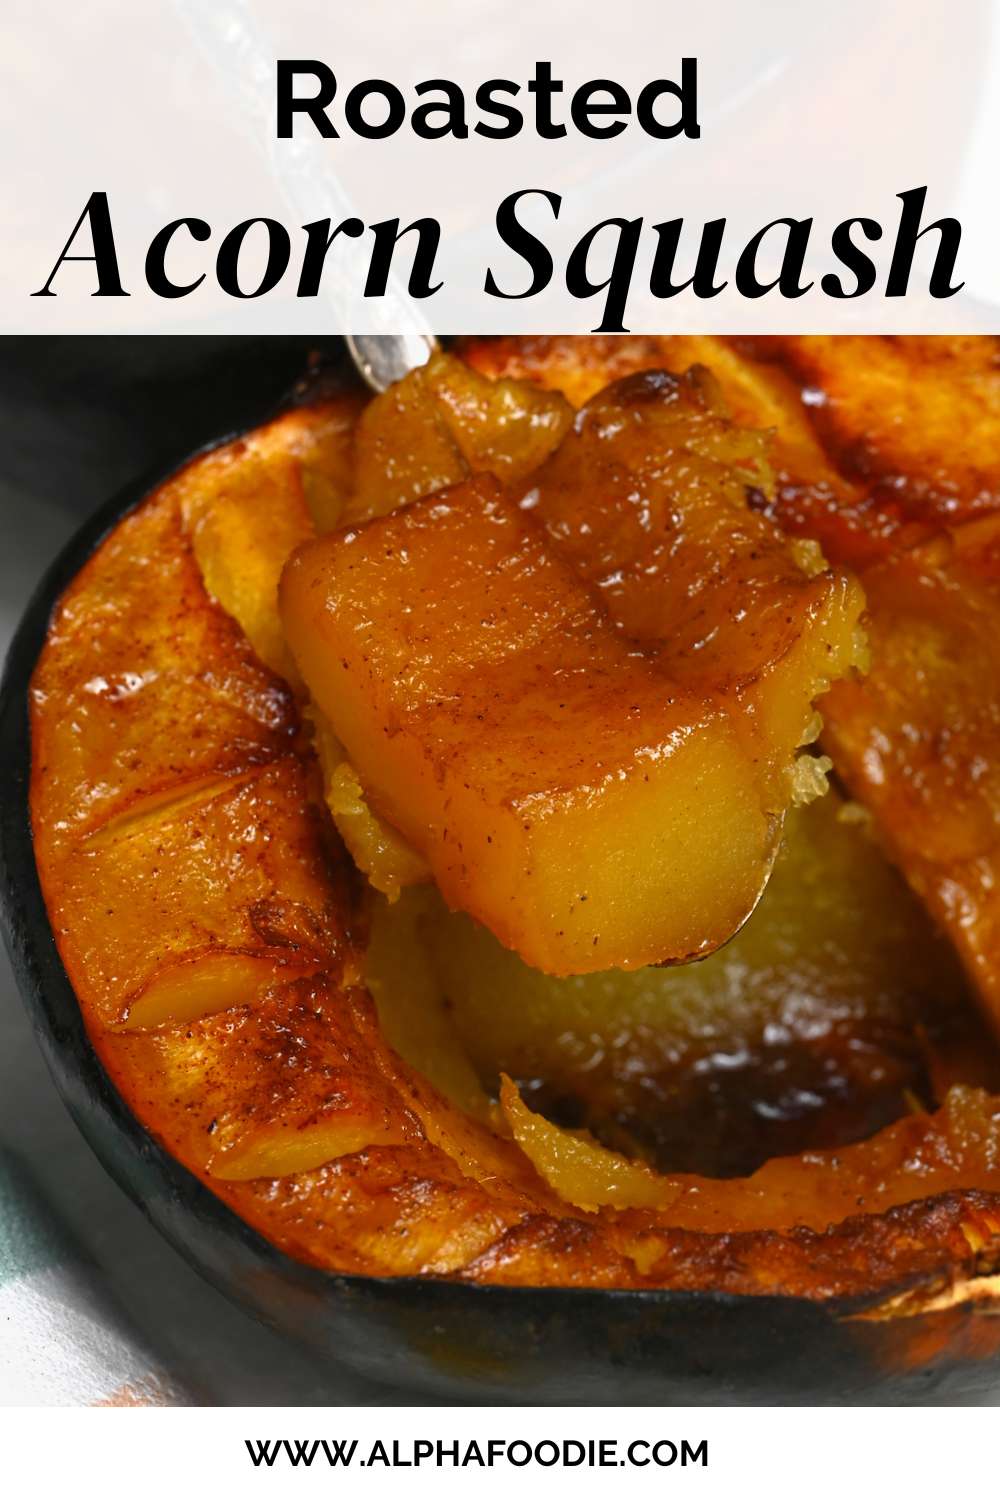 Best Baked Acorn Squash Recipe - Alphafoodie